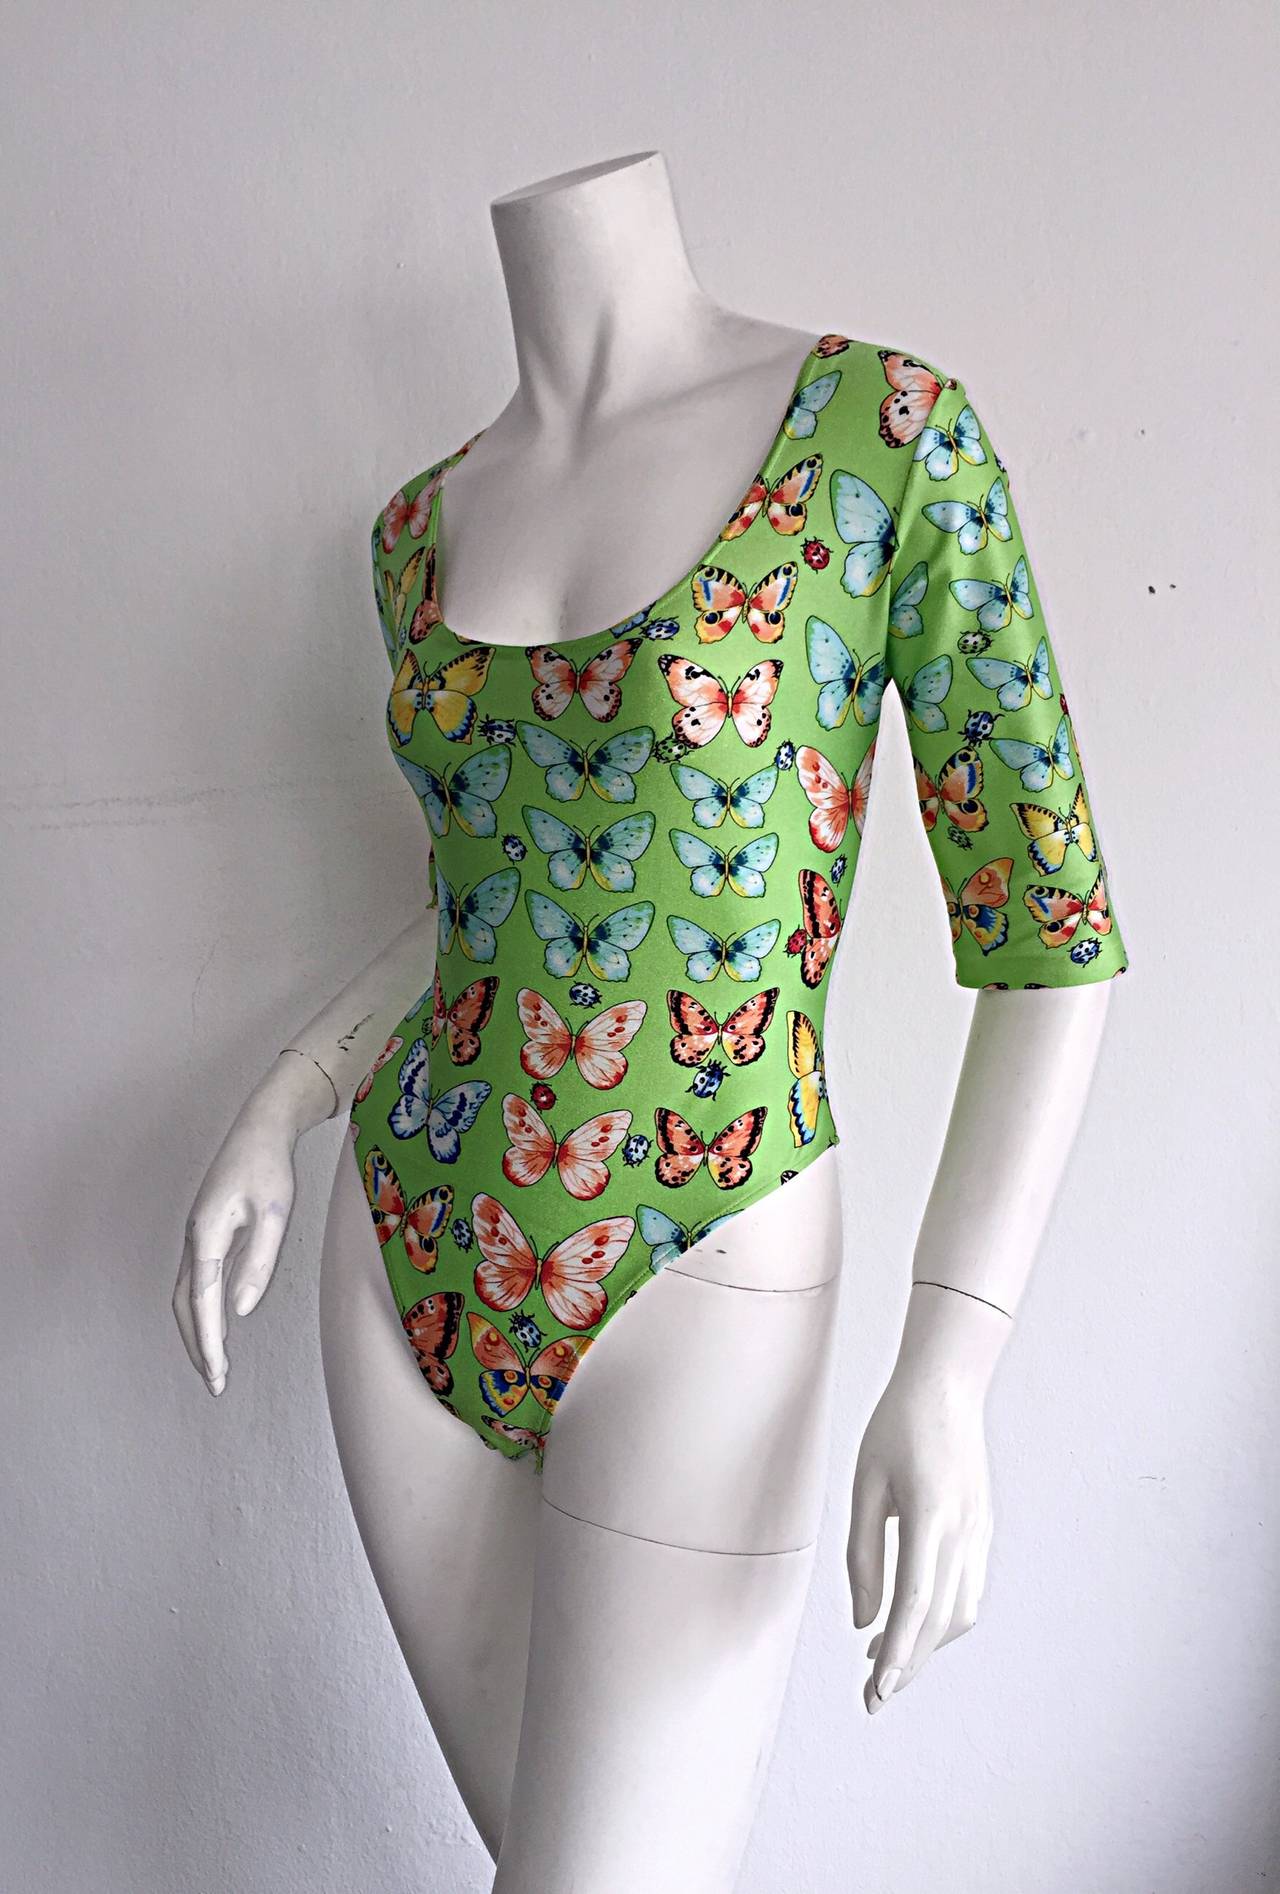 Rare Vintage Kamosho by Marina Sitbon Butterfly + Ladybug Bodysuit Playsuit 1